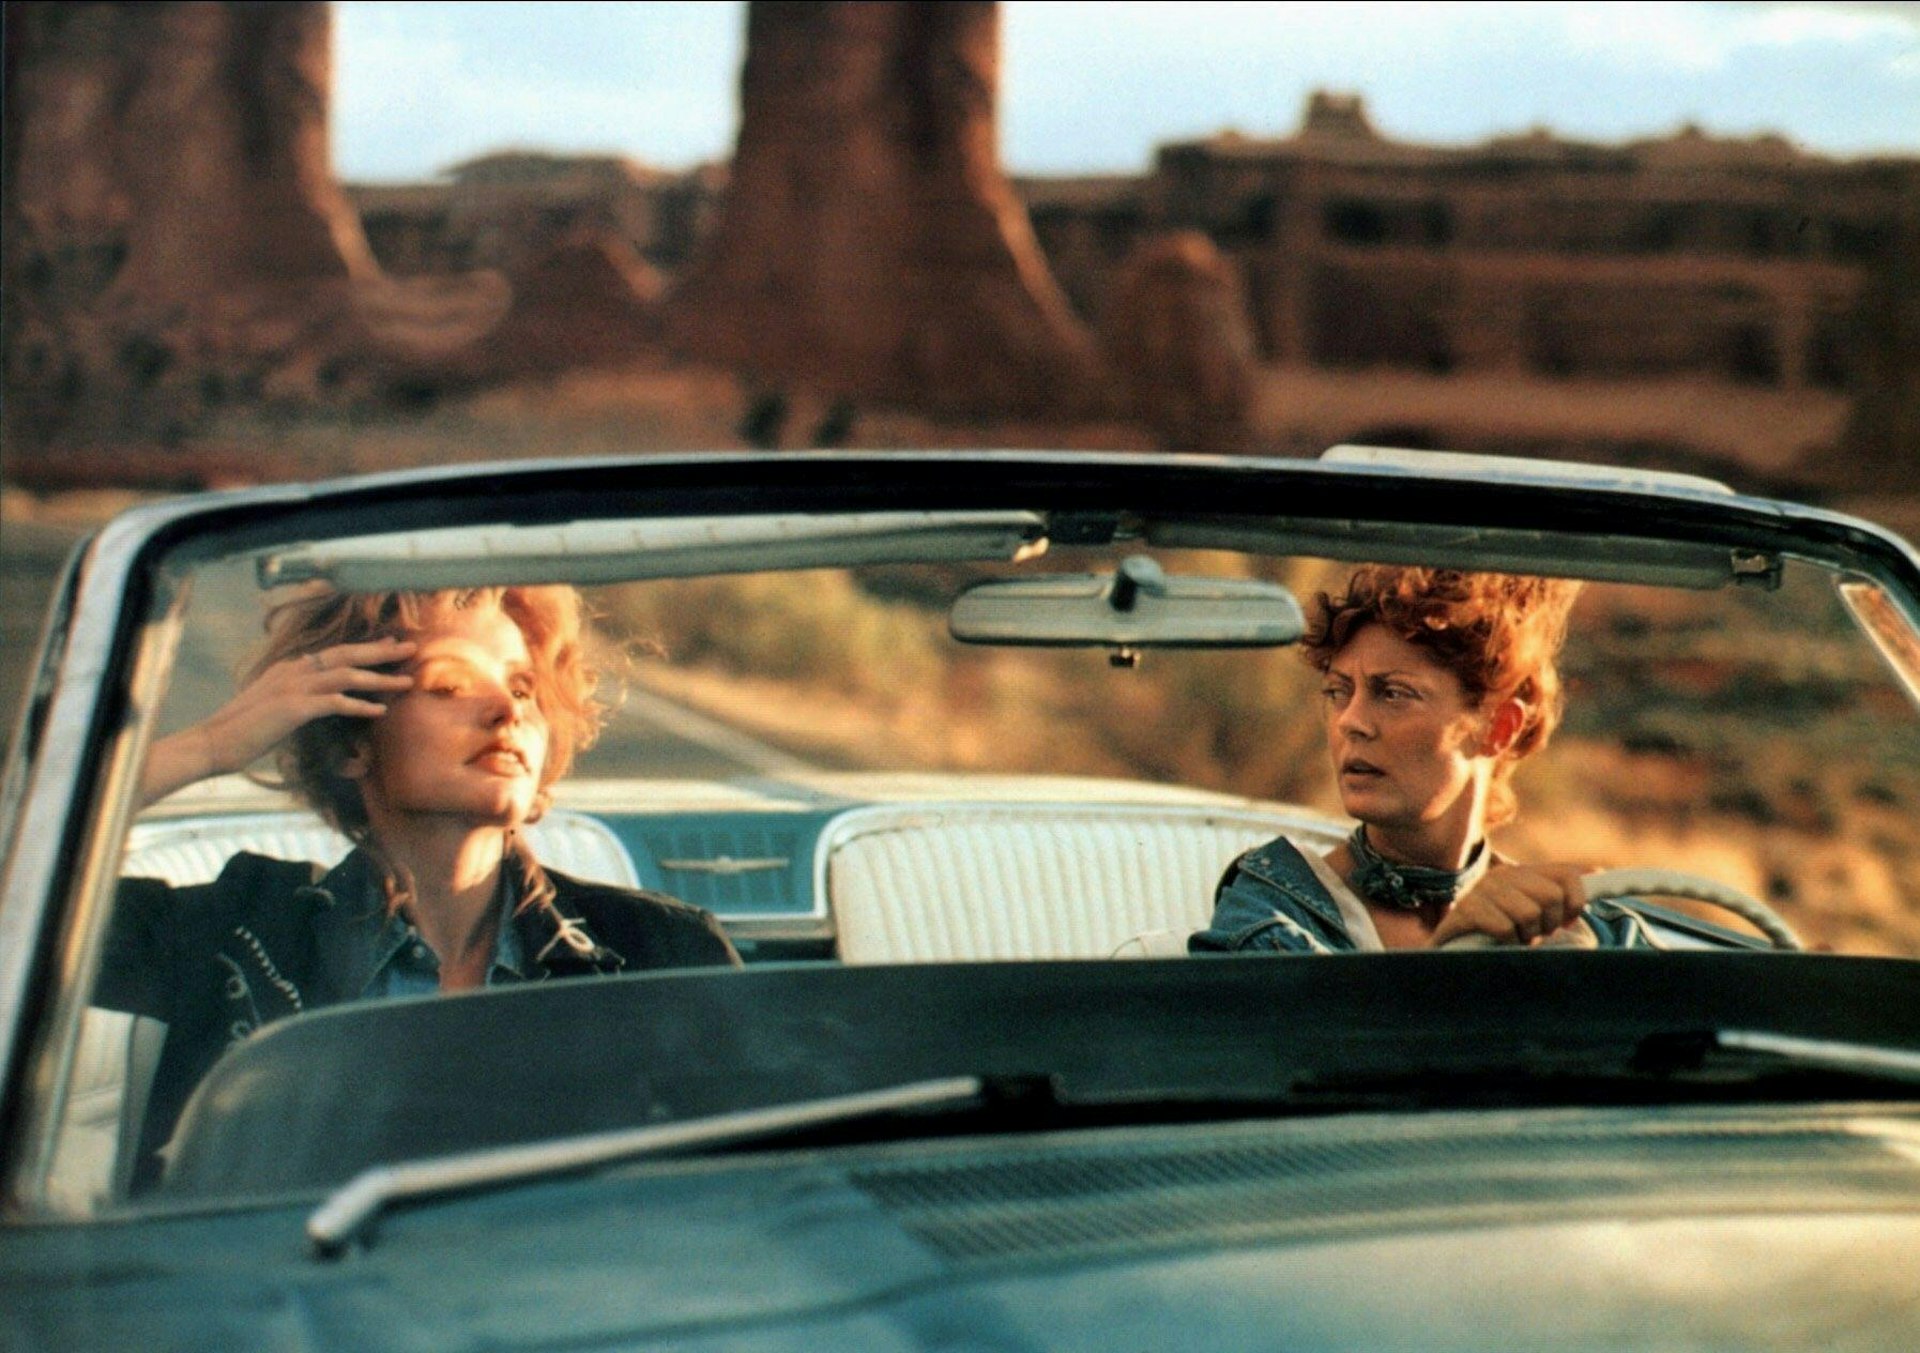 Geena Davis and Susan Sarandon in a Ridley Scott’s road-trip movie “Thelma & Louise” (1991)